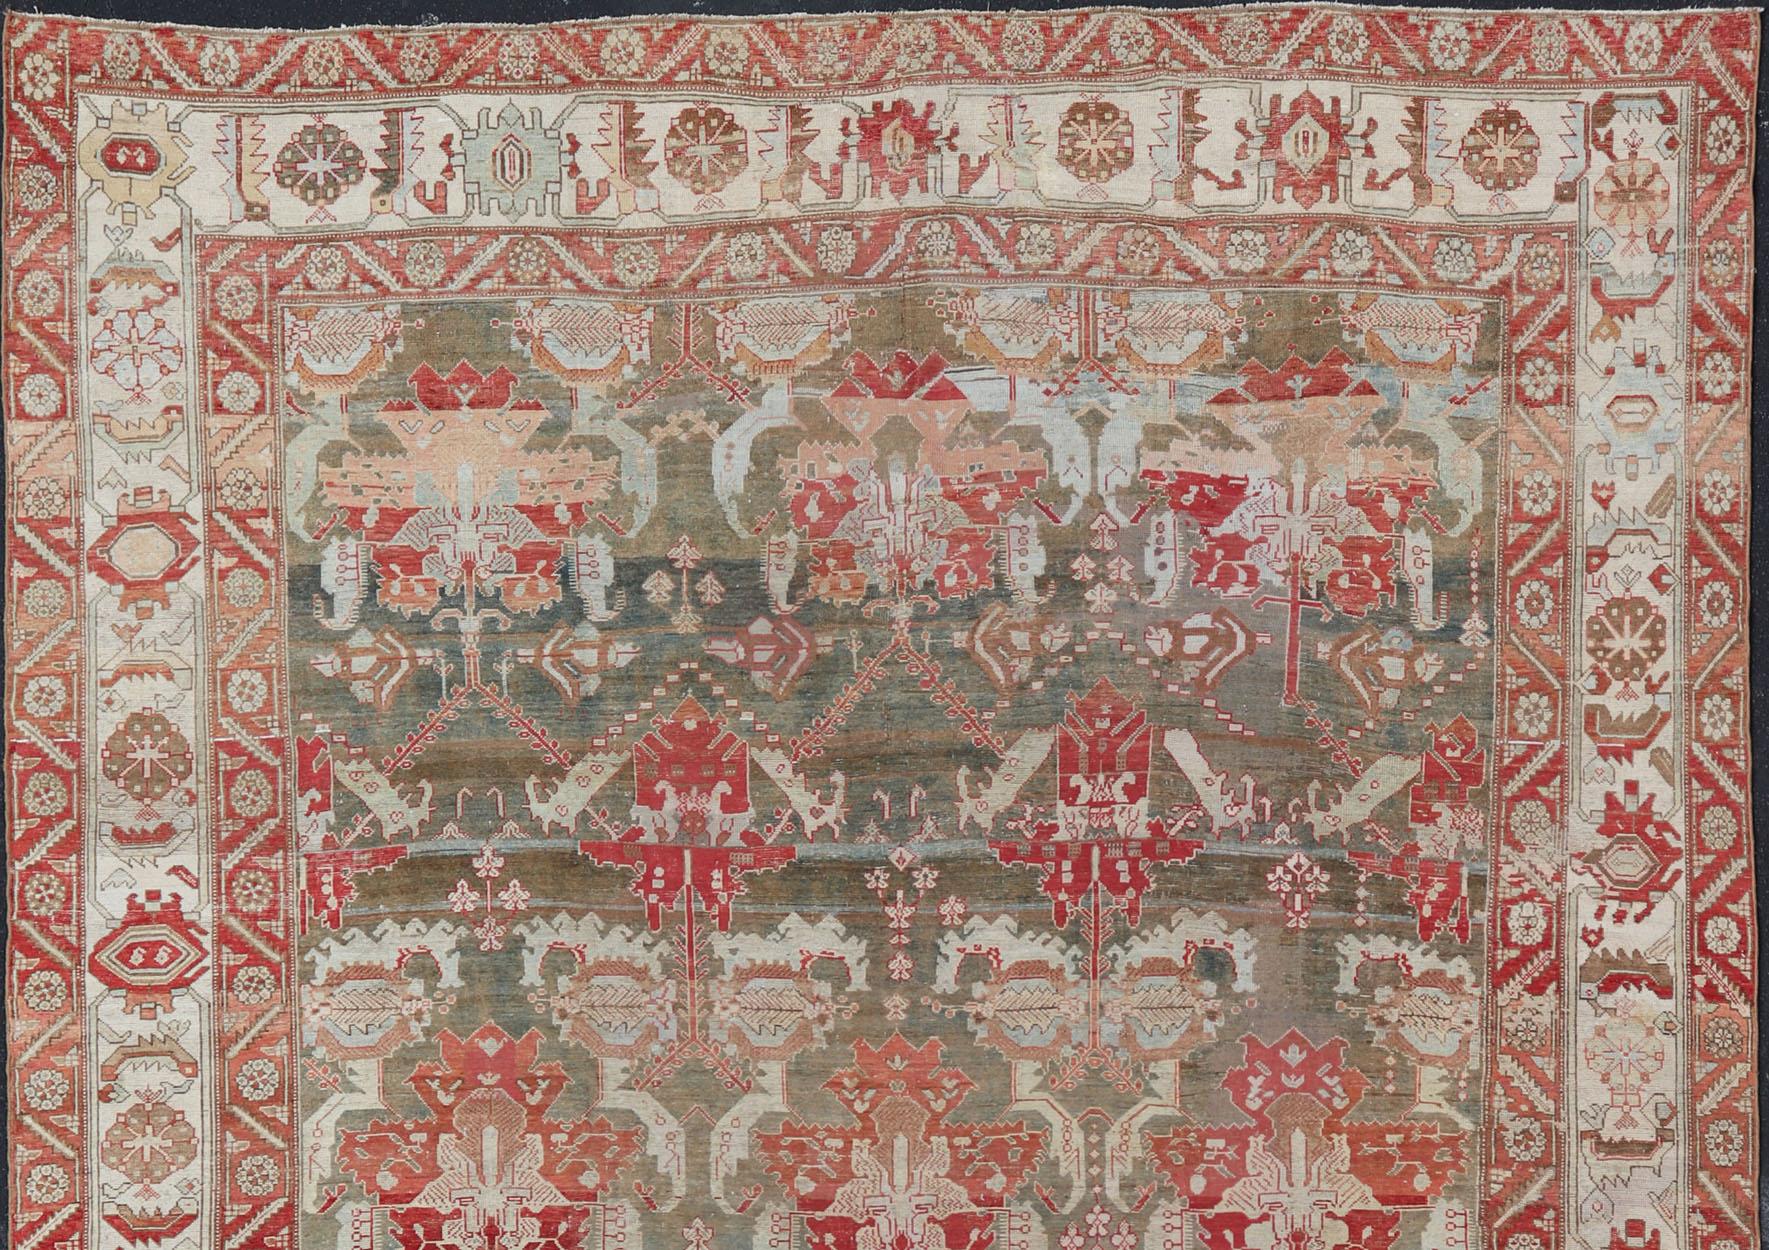 Antique Persian Large Scale Tribal Design Bakhtiari Rug in Multi Colors For Sale 1